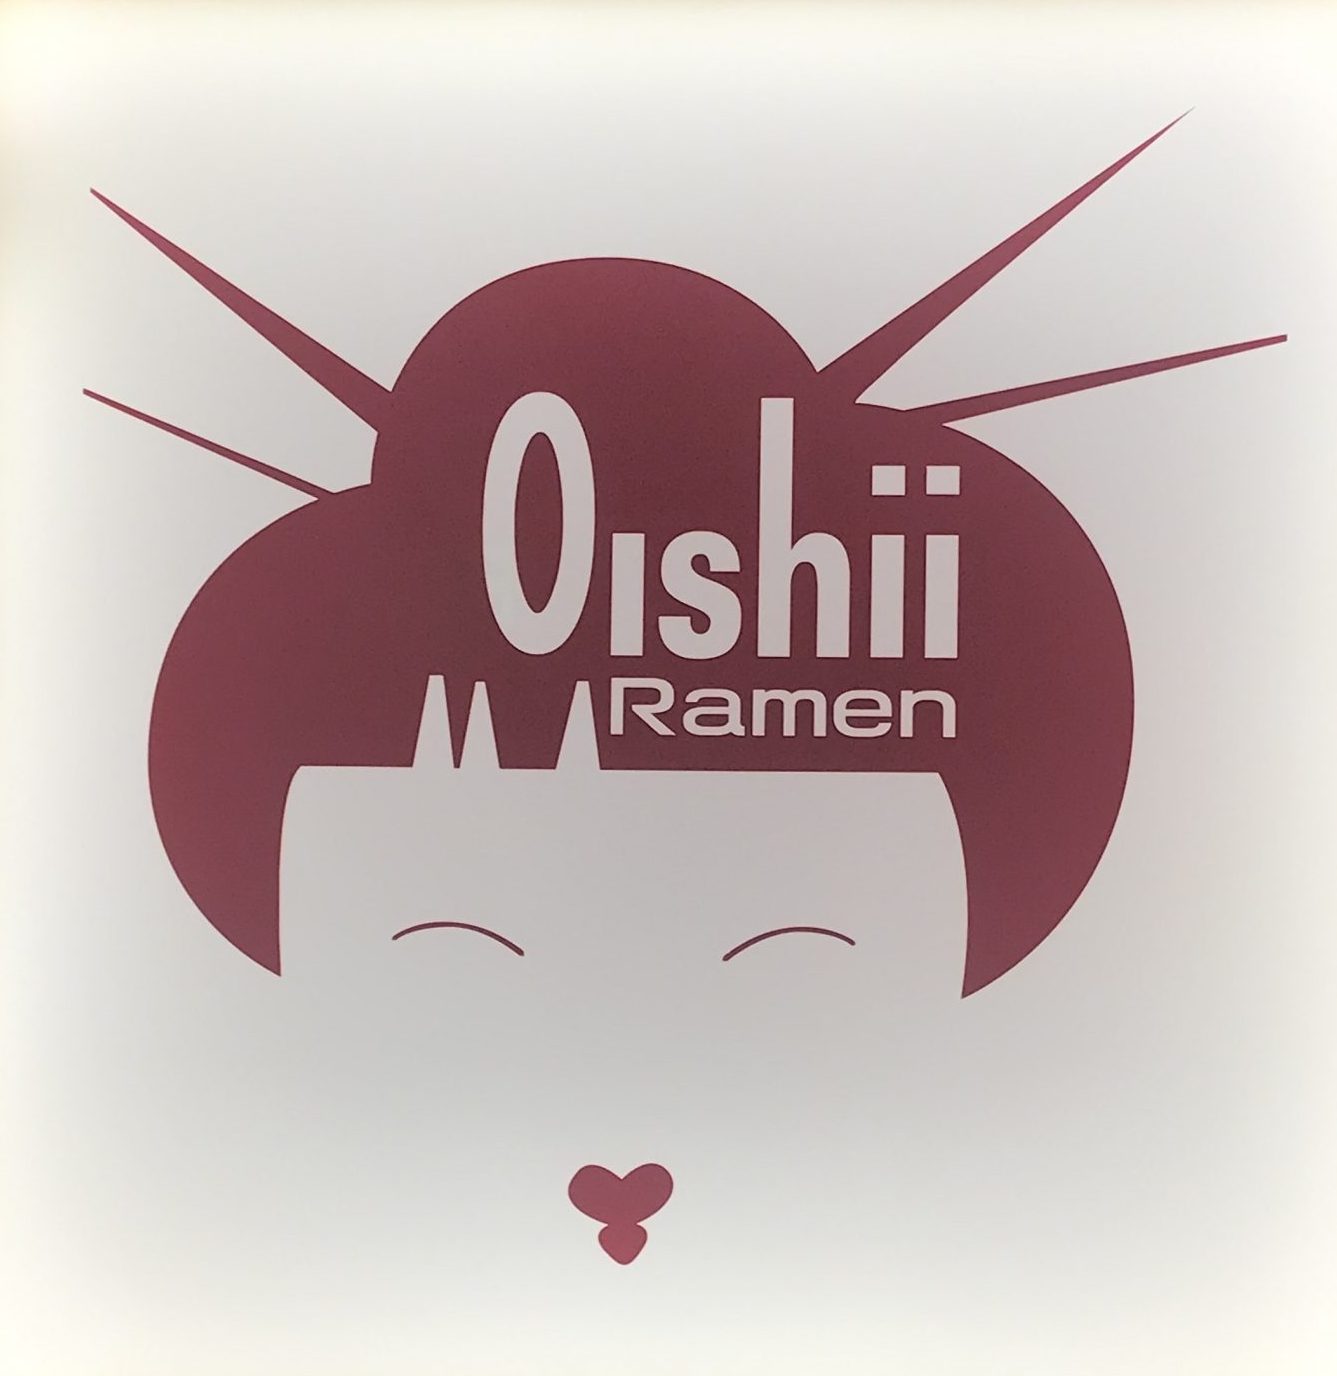 Oishii Ramen